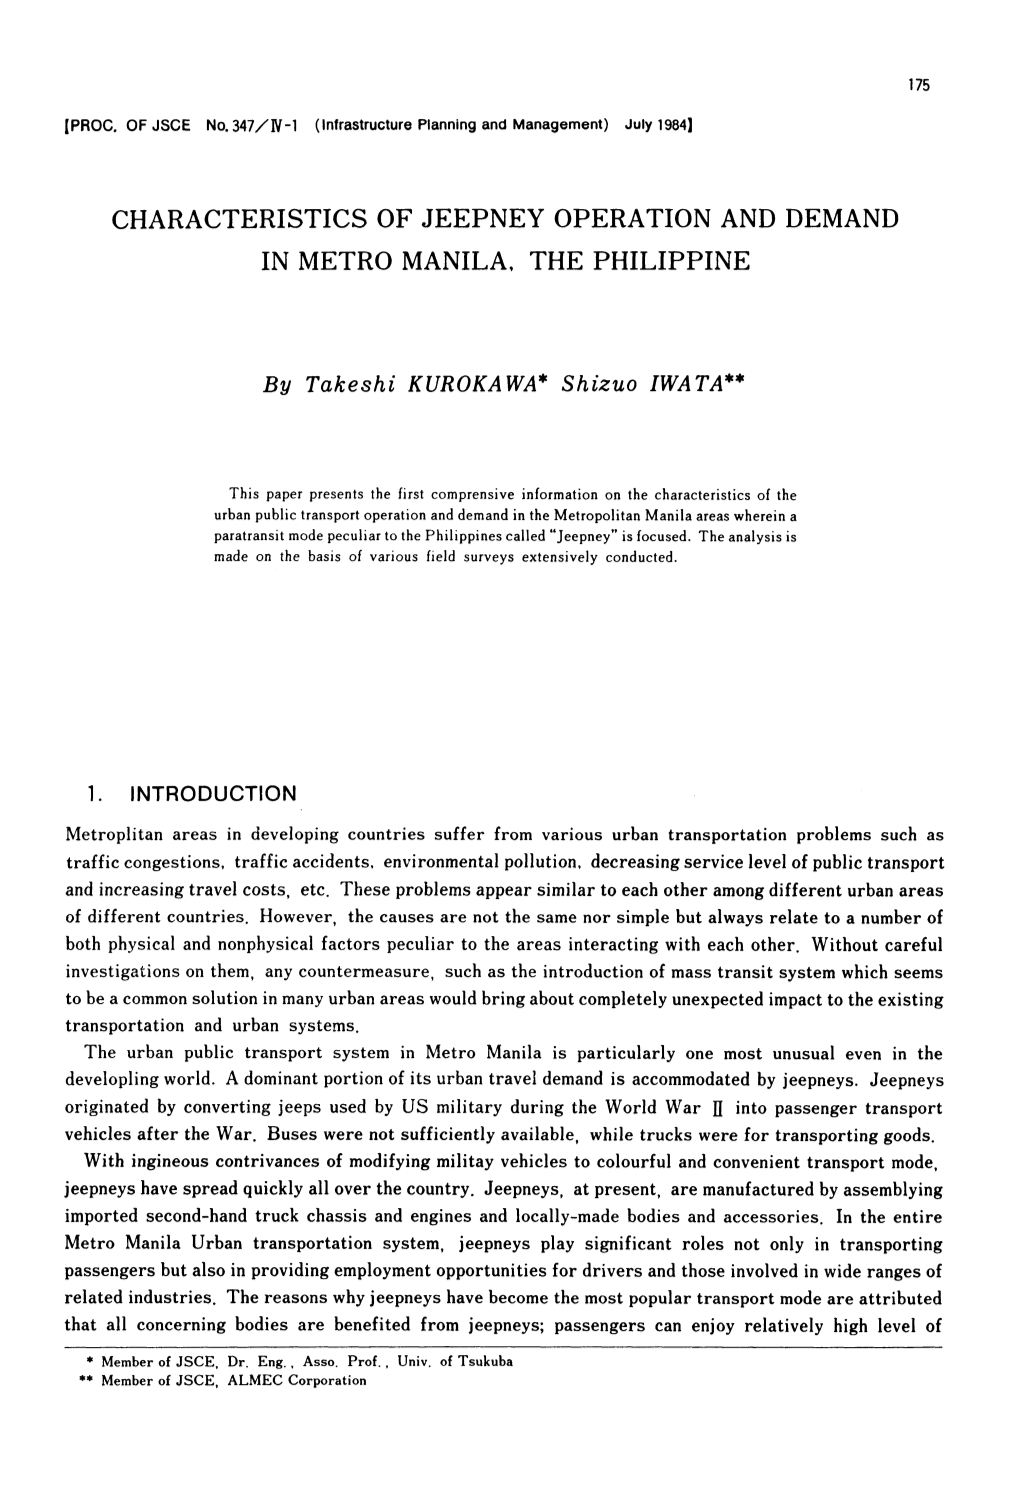 Characteristics of Jeepney Operation and Demand in Metro Manila